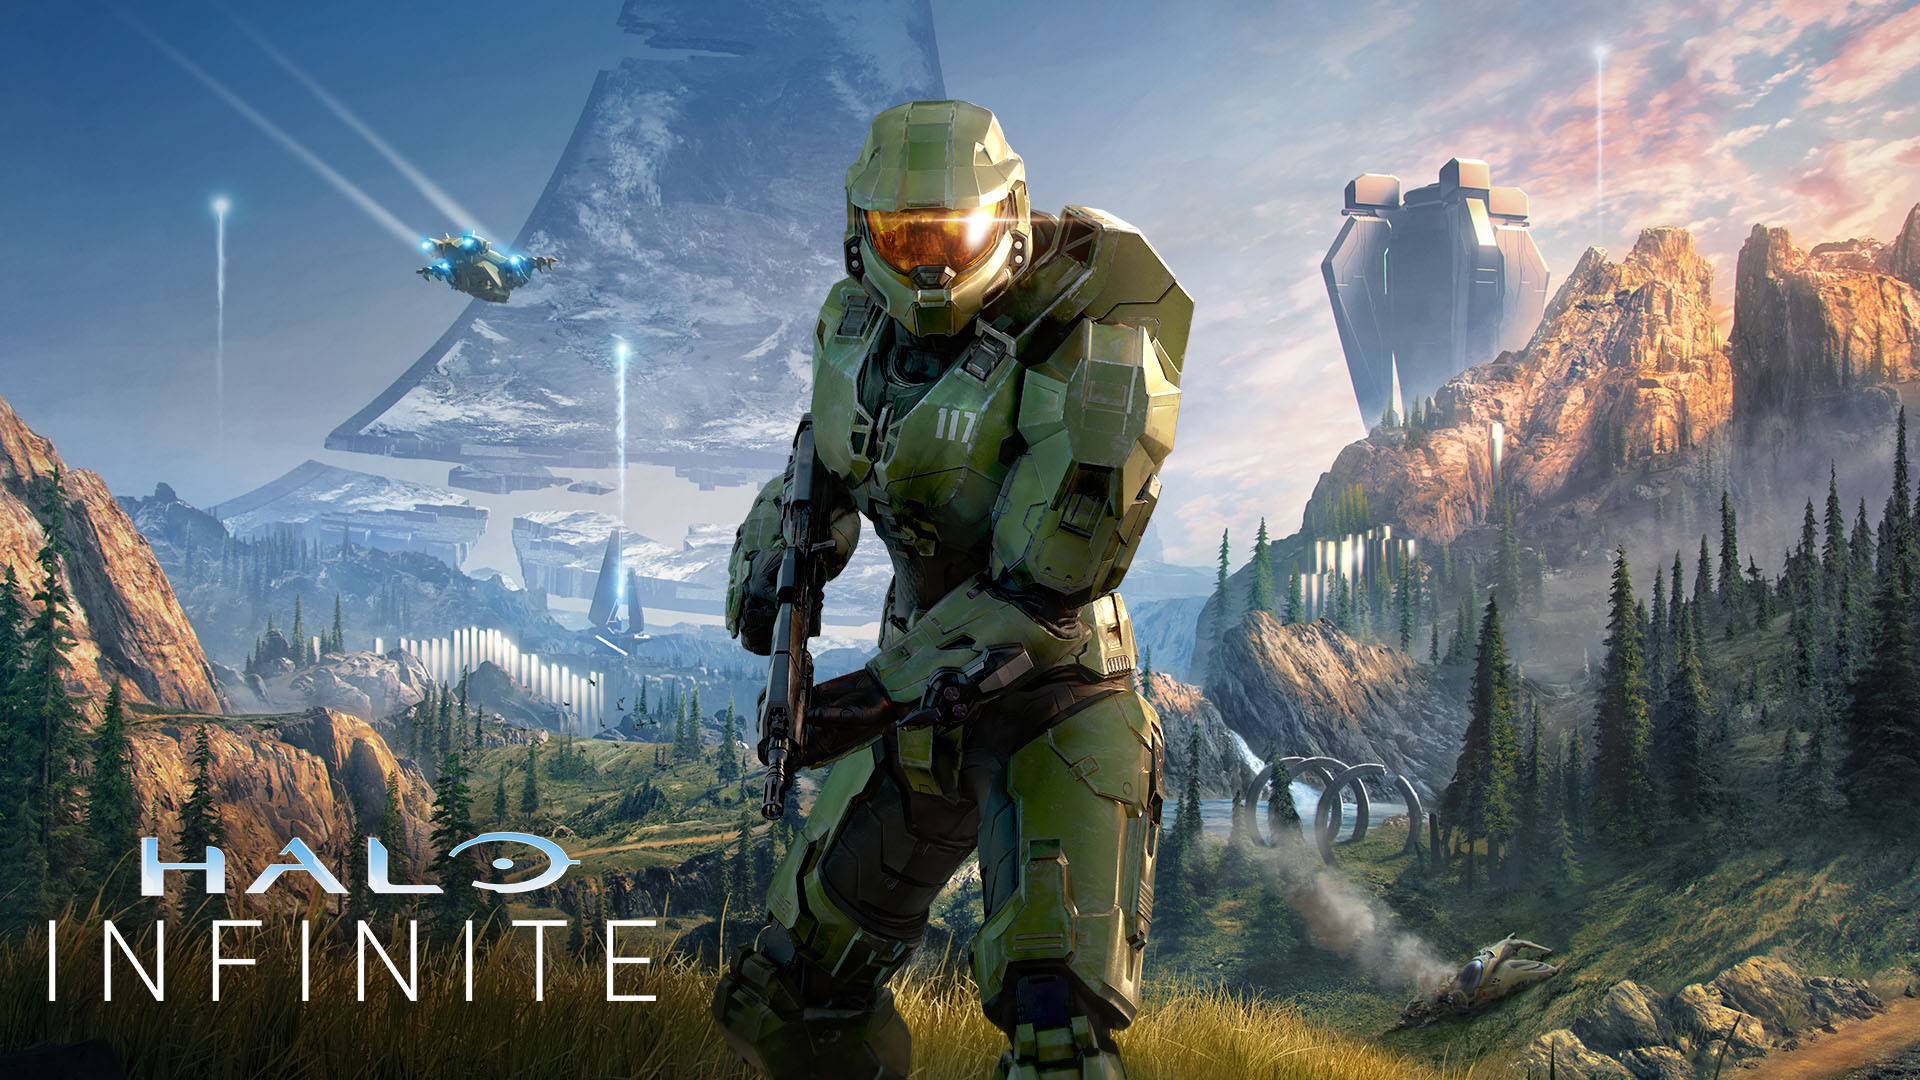 Halo Infinite มีกำหนดการวางจำหน่ายใหม่ในช่วงฤดูใบไม้ร่วงของปี 2021 นี้